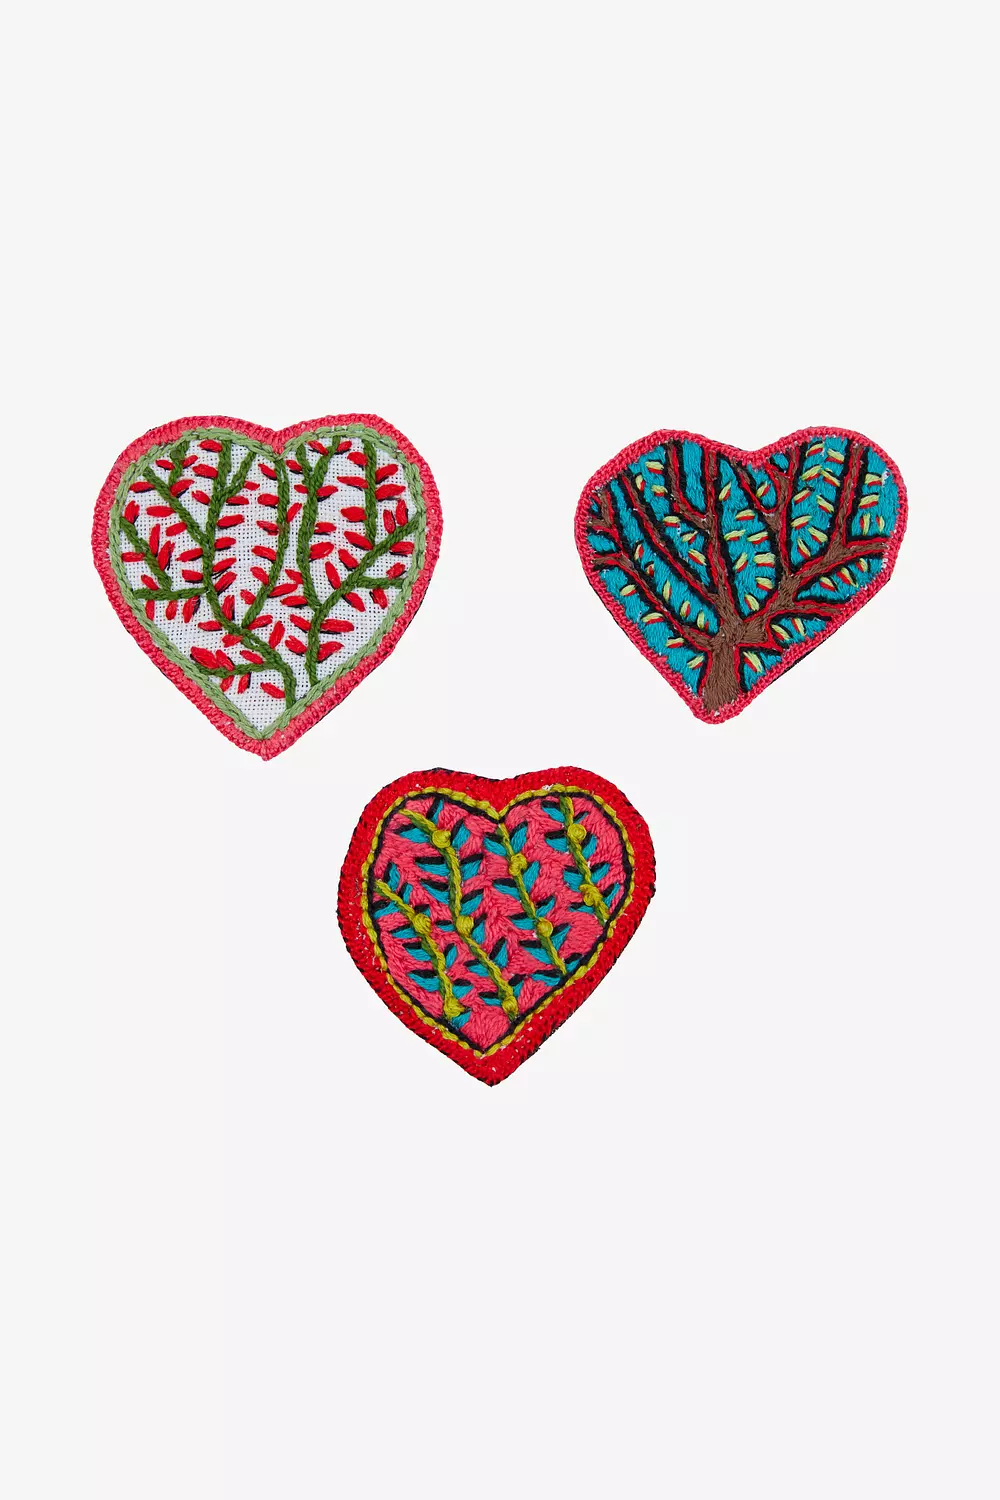 DMC x Il Est Un Air - Heart Easy Embroidery Patches - DMC